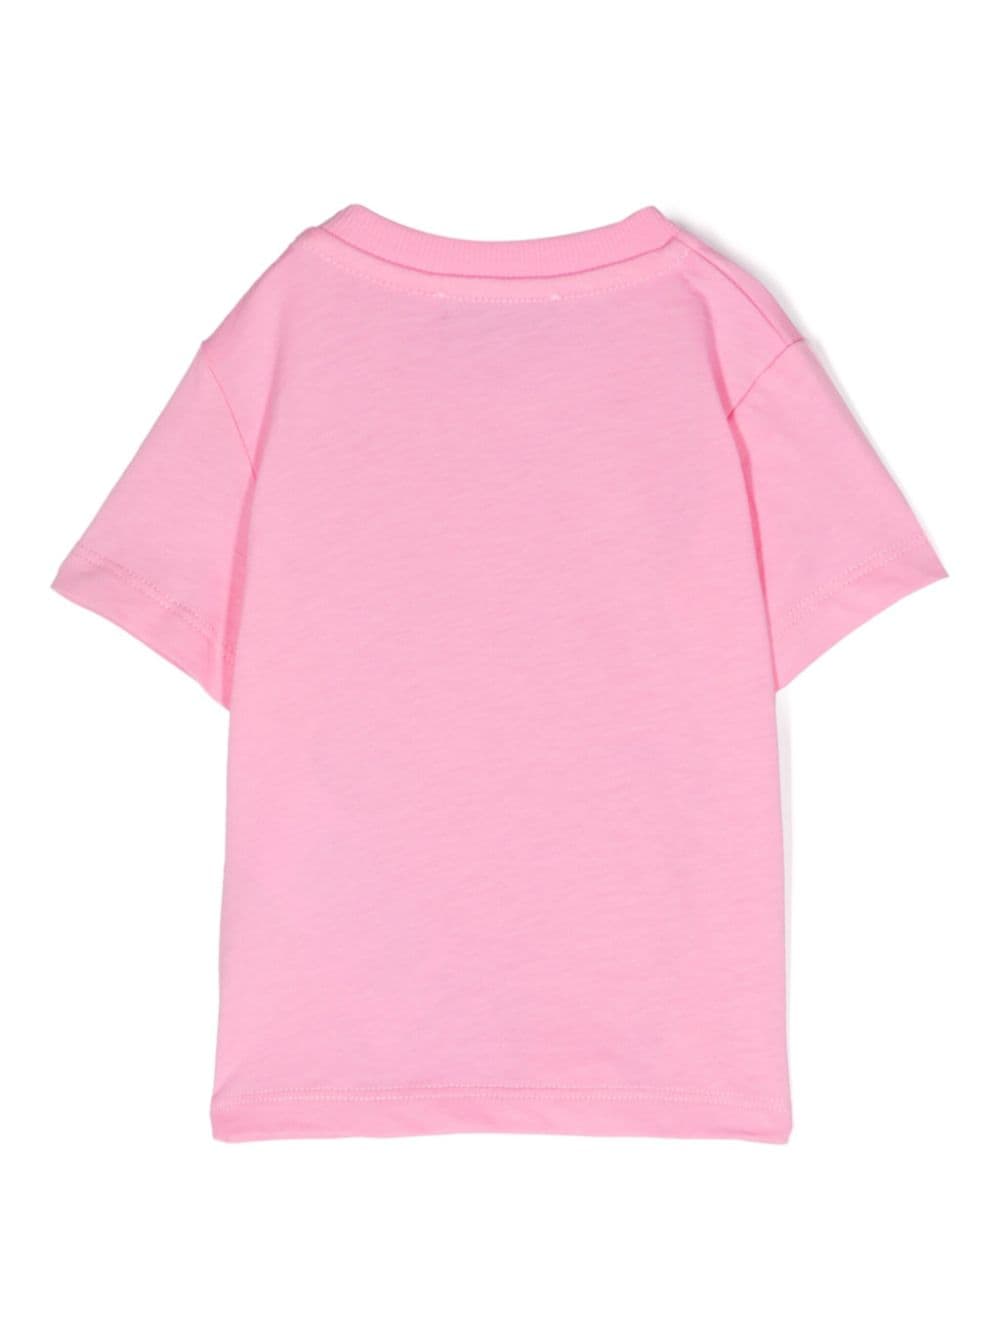 T-shirt rosa Teddy bear toy neonata